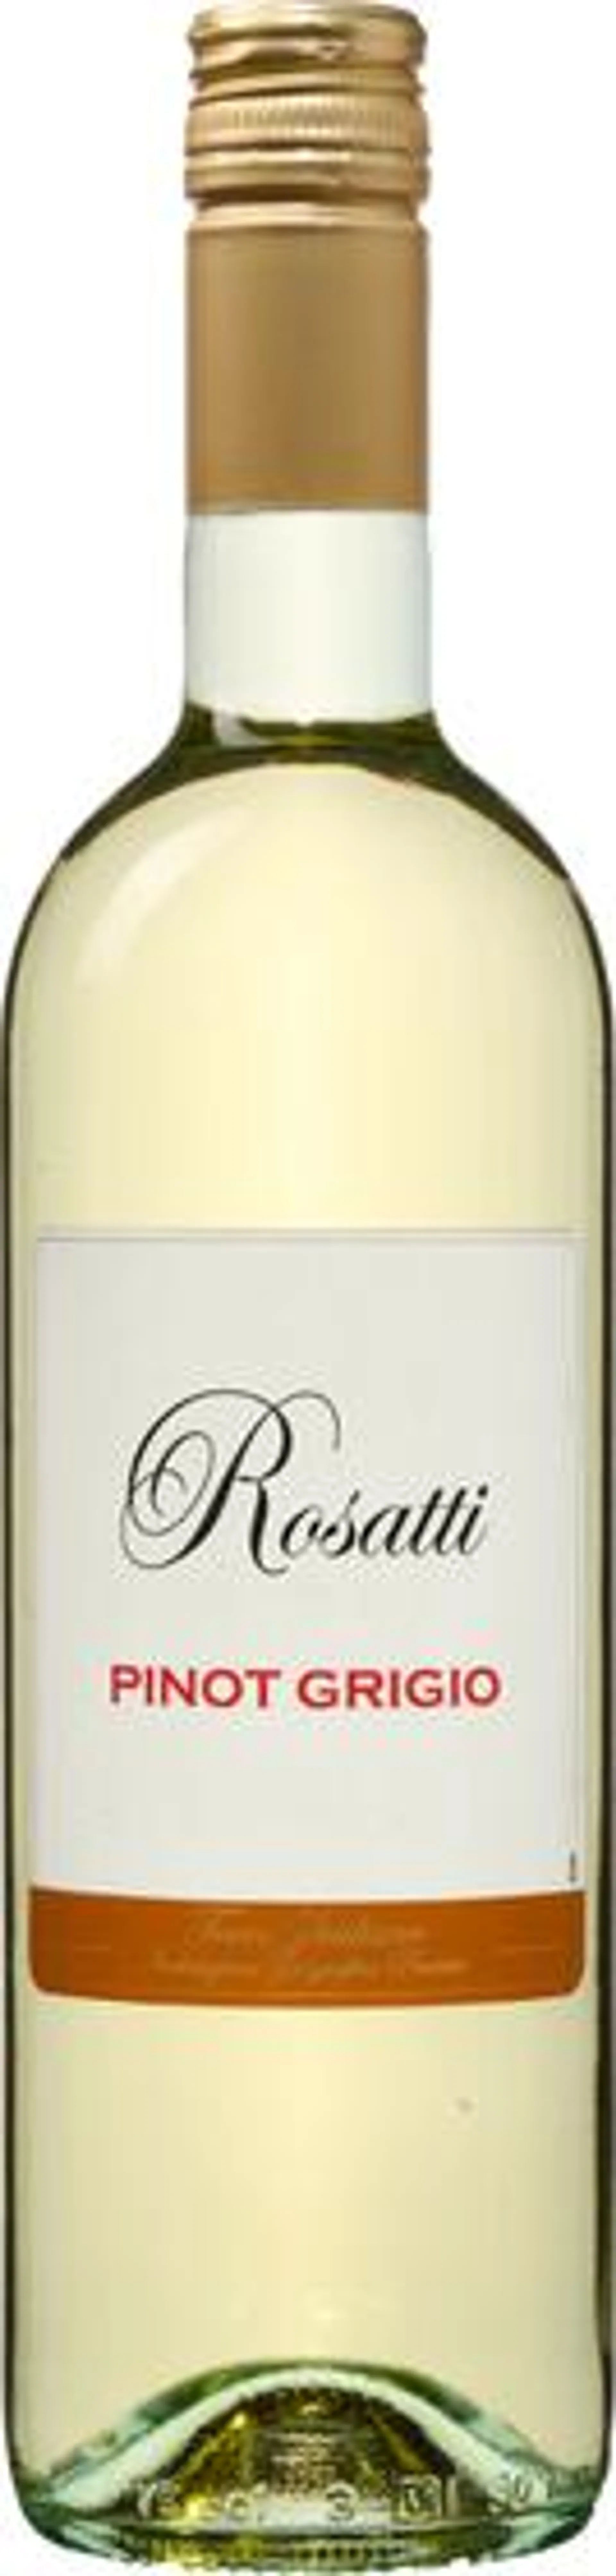 Rosatti Pinot Grigio